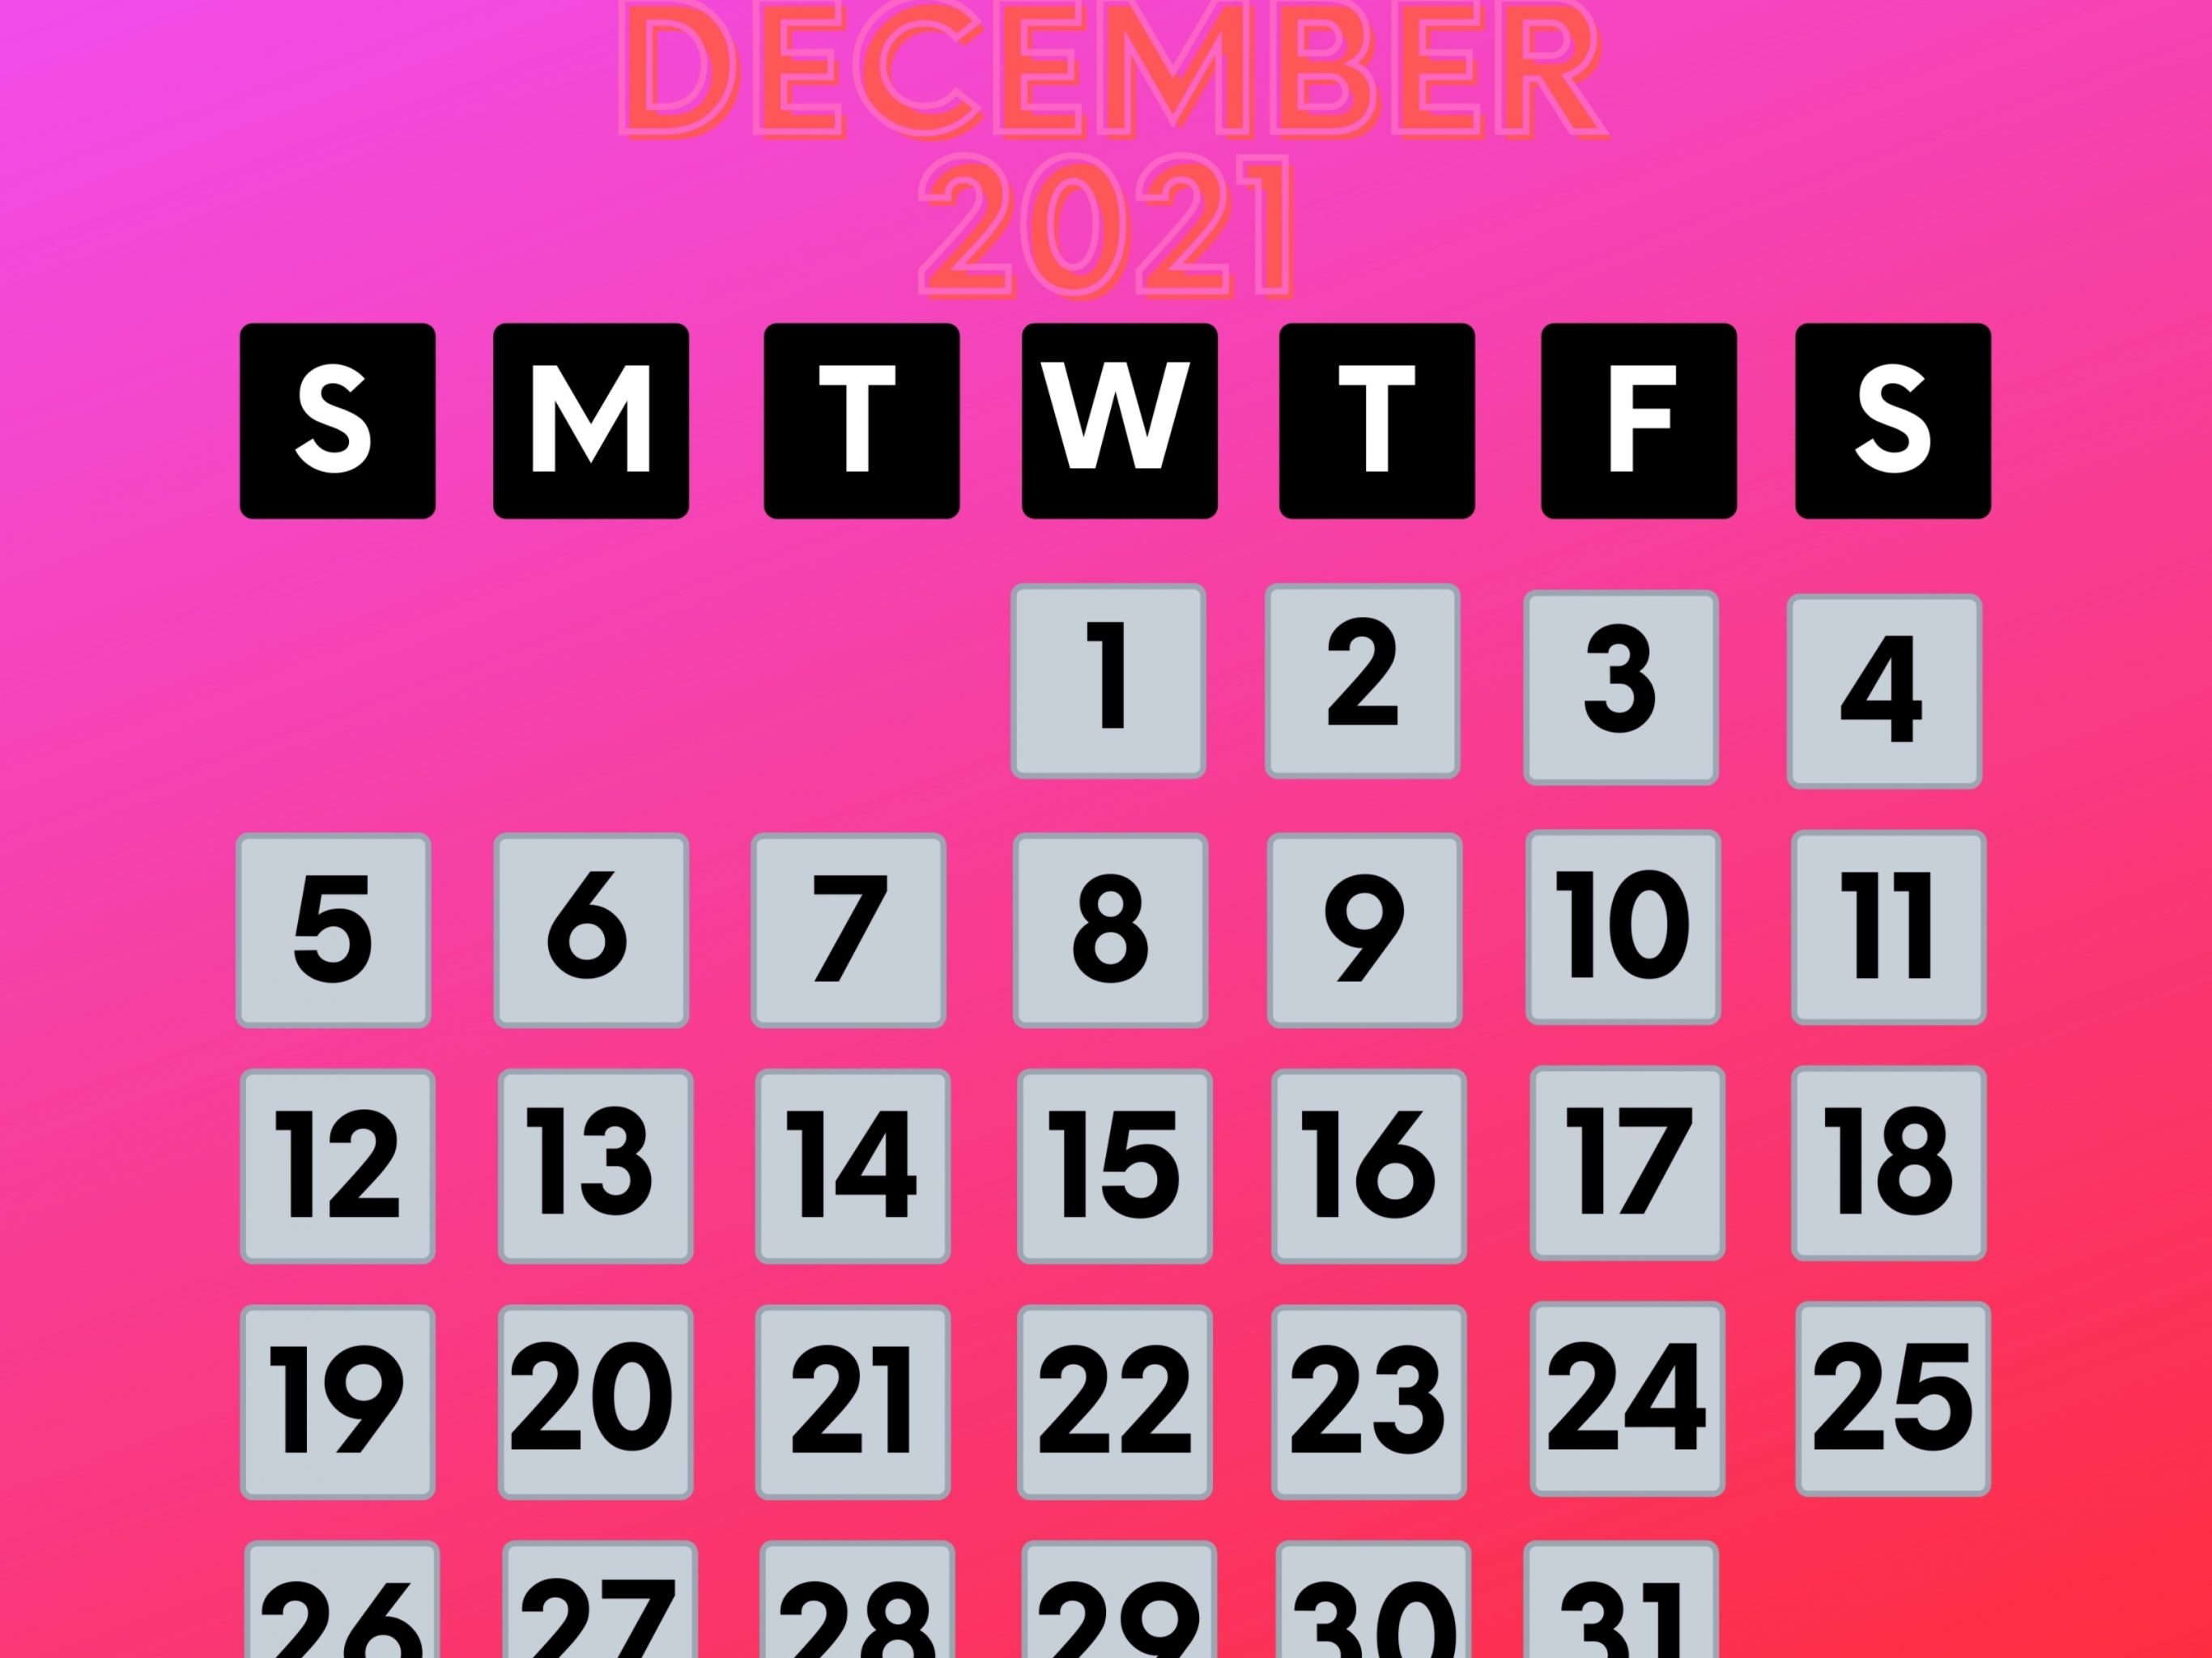 2732x2048 iPad air iPad Pro wallpapers December 2021 Calendar iPad Wallpaper 2732x2048 pixels resolution